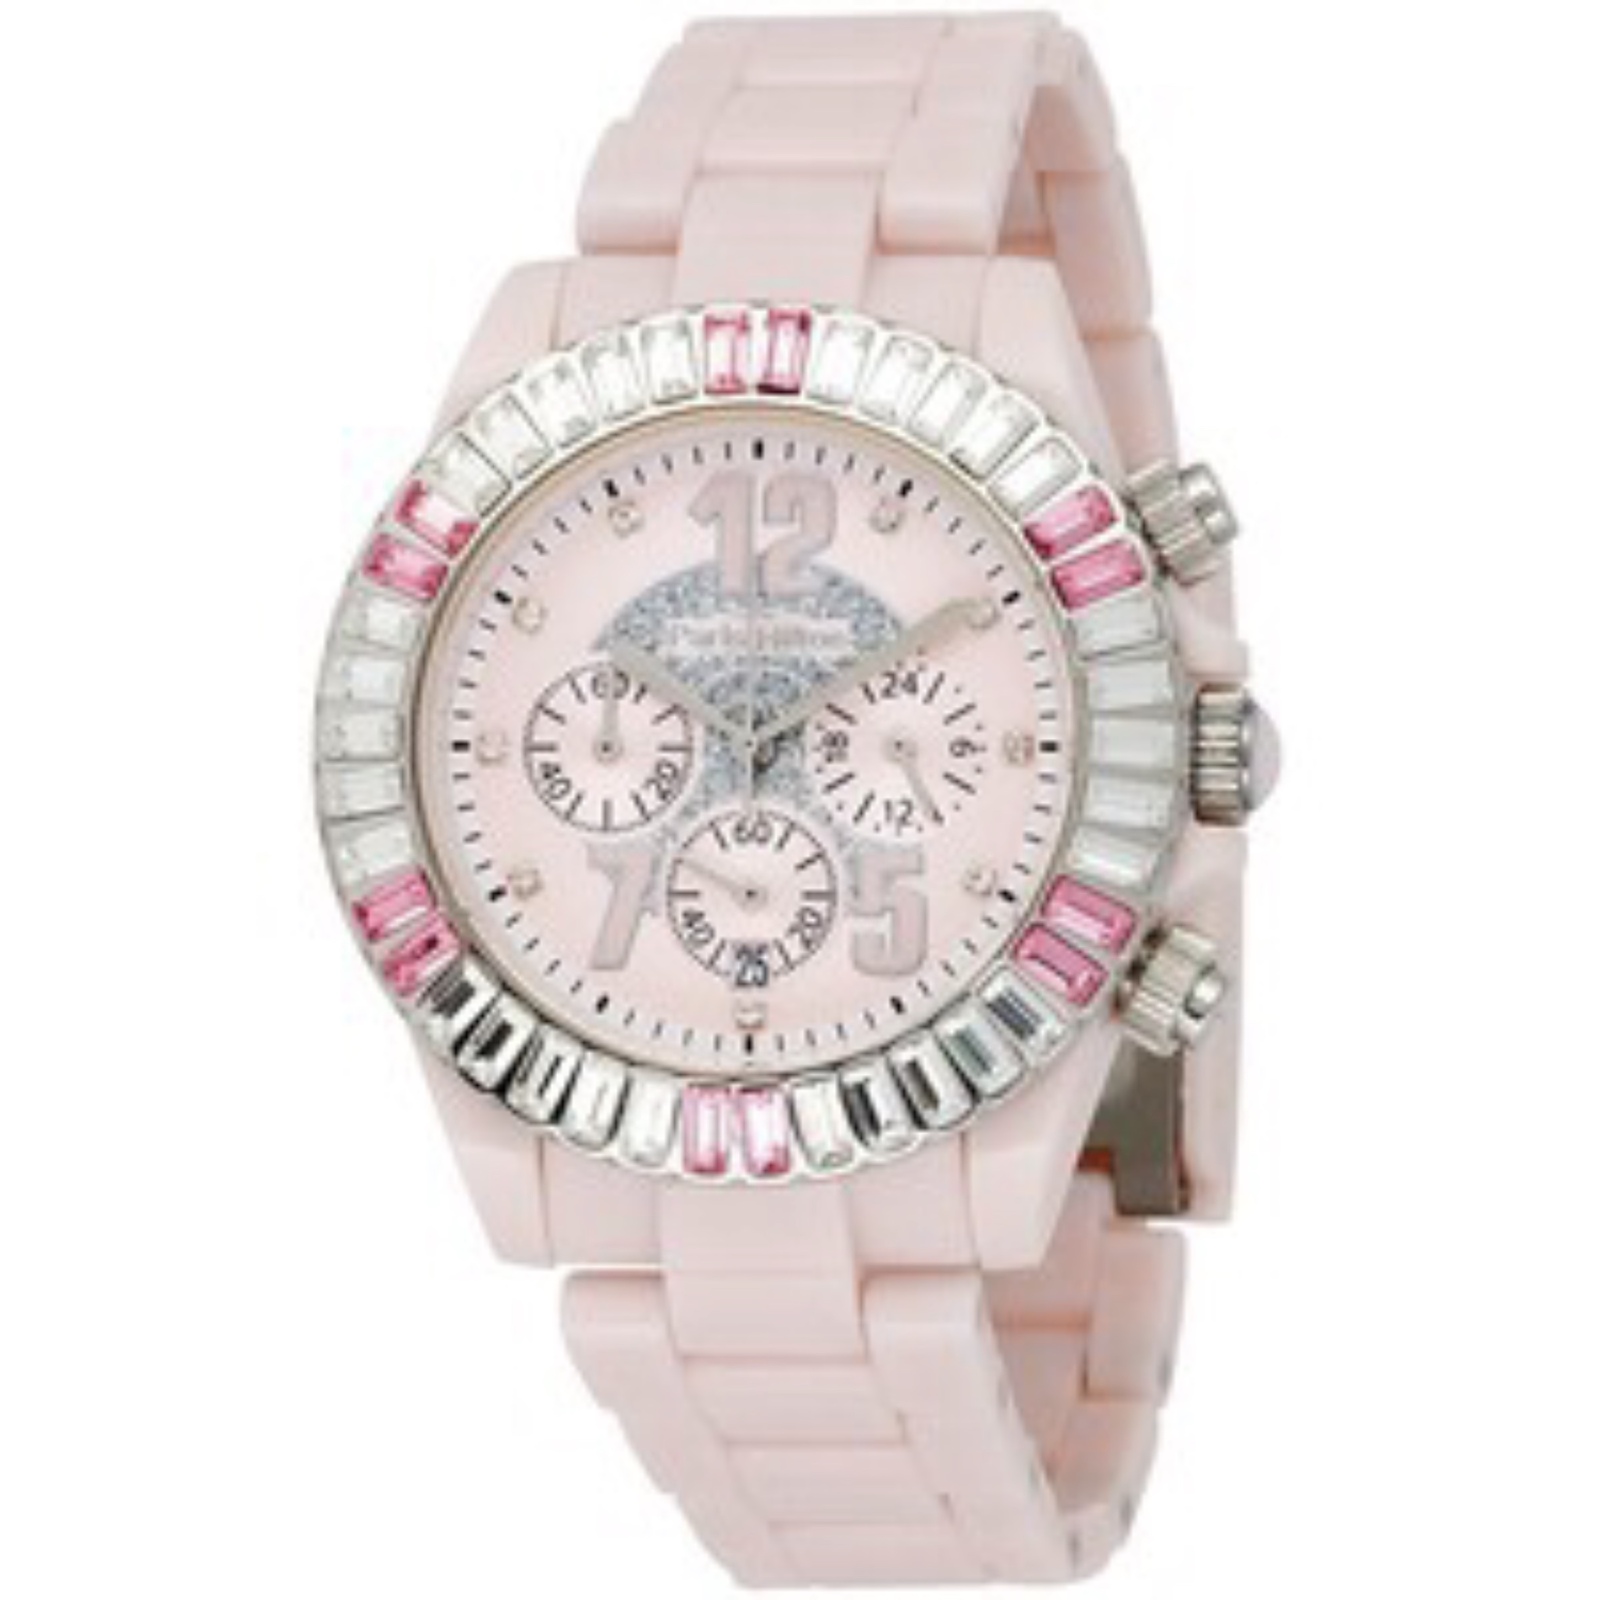 Paris Hilton Pink Wrist Watch - $299.00